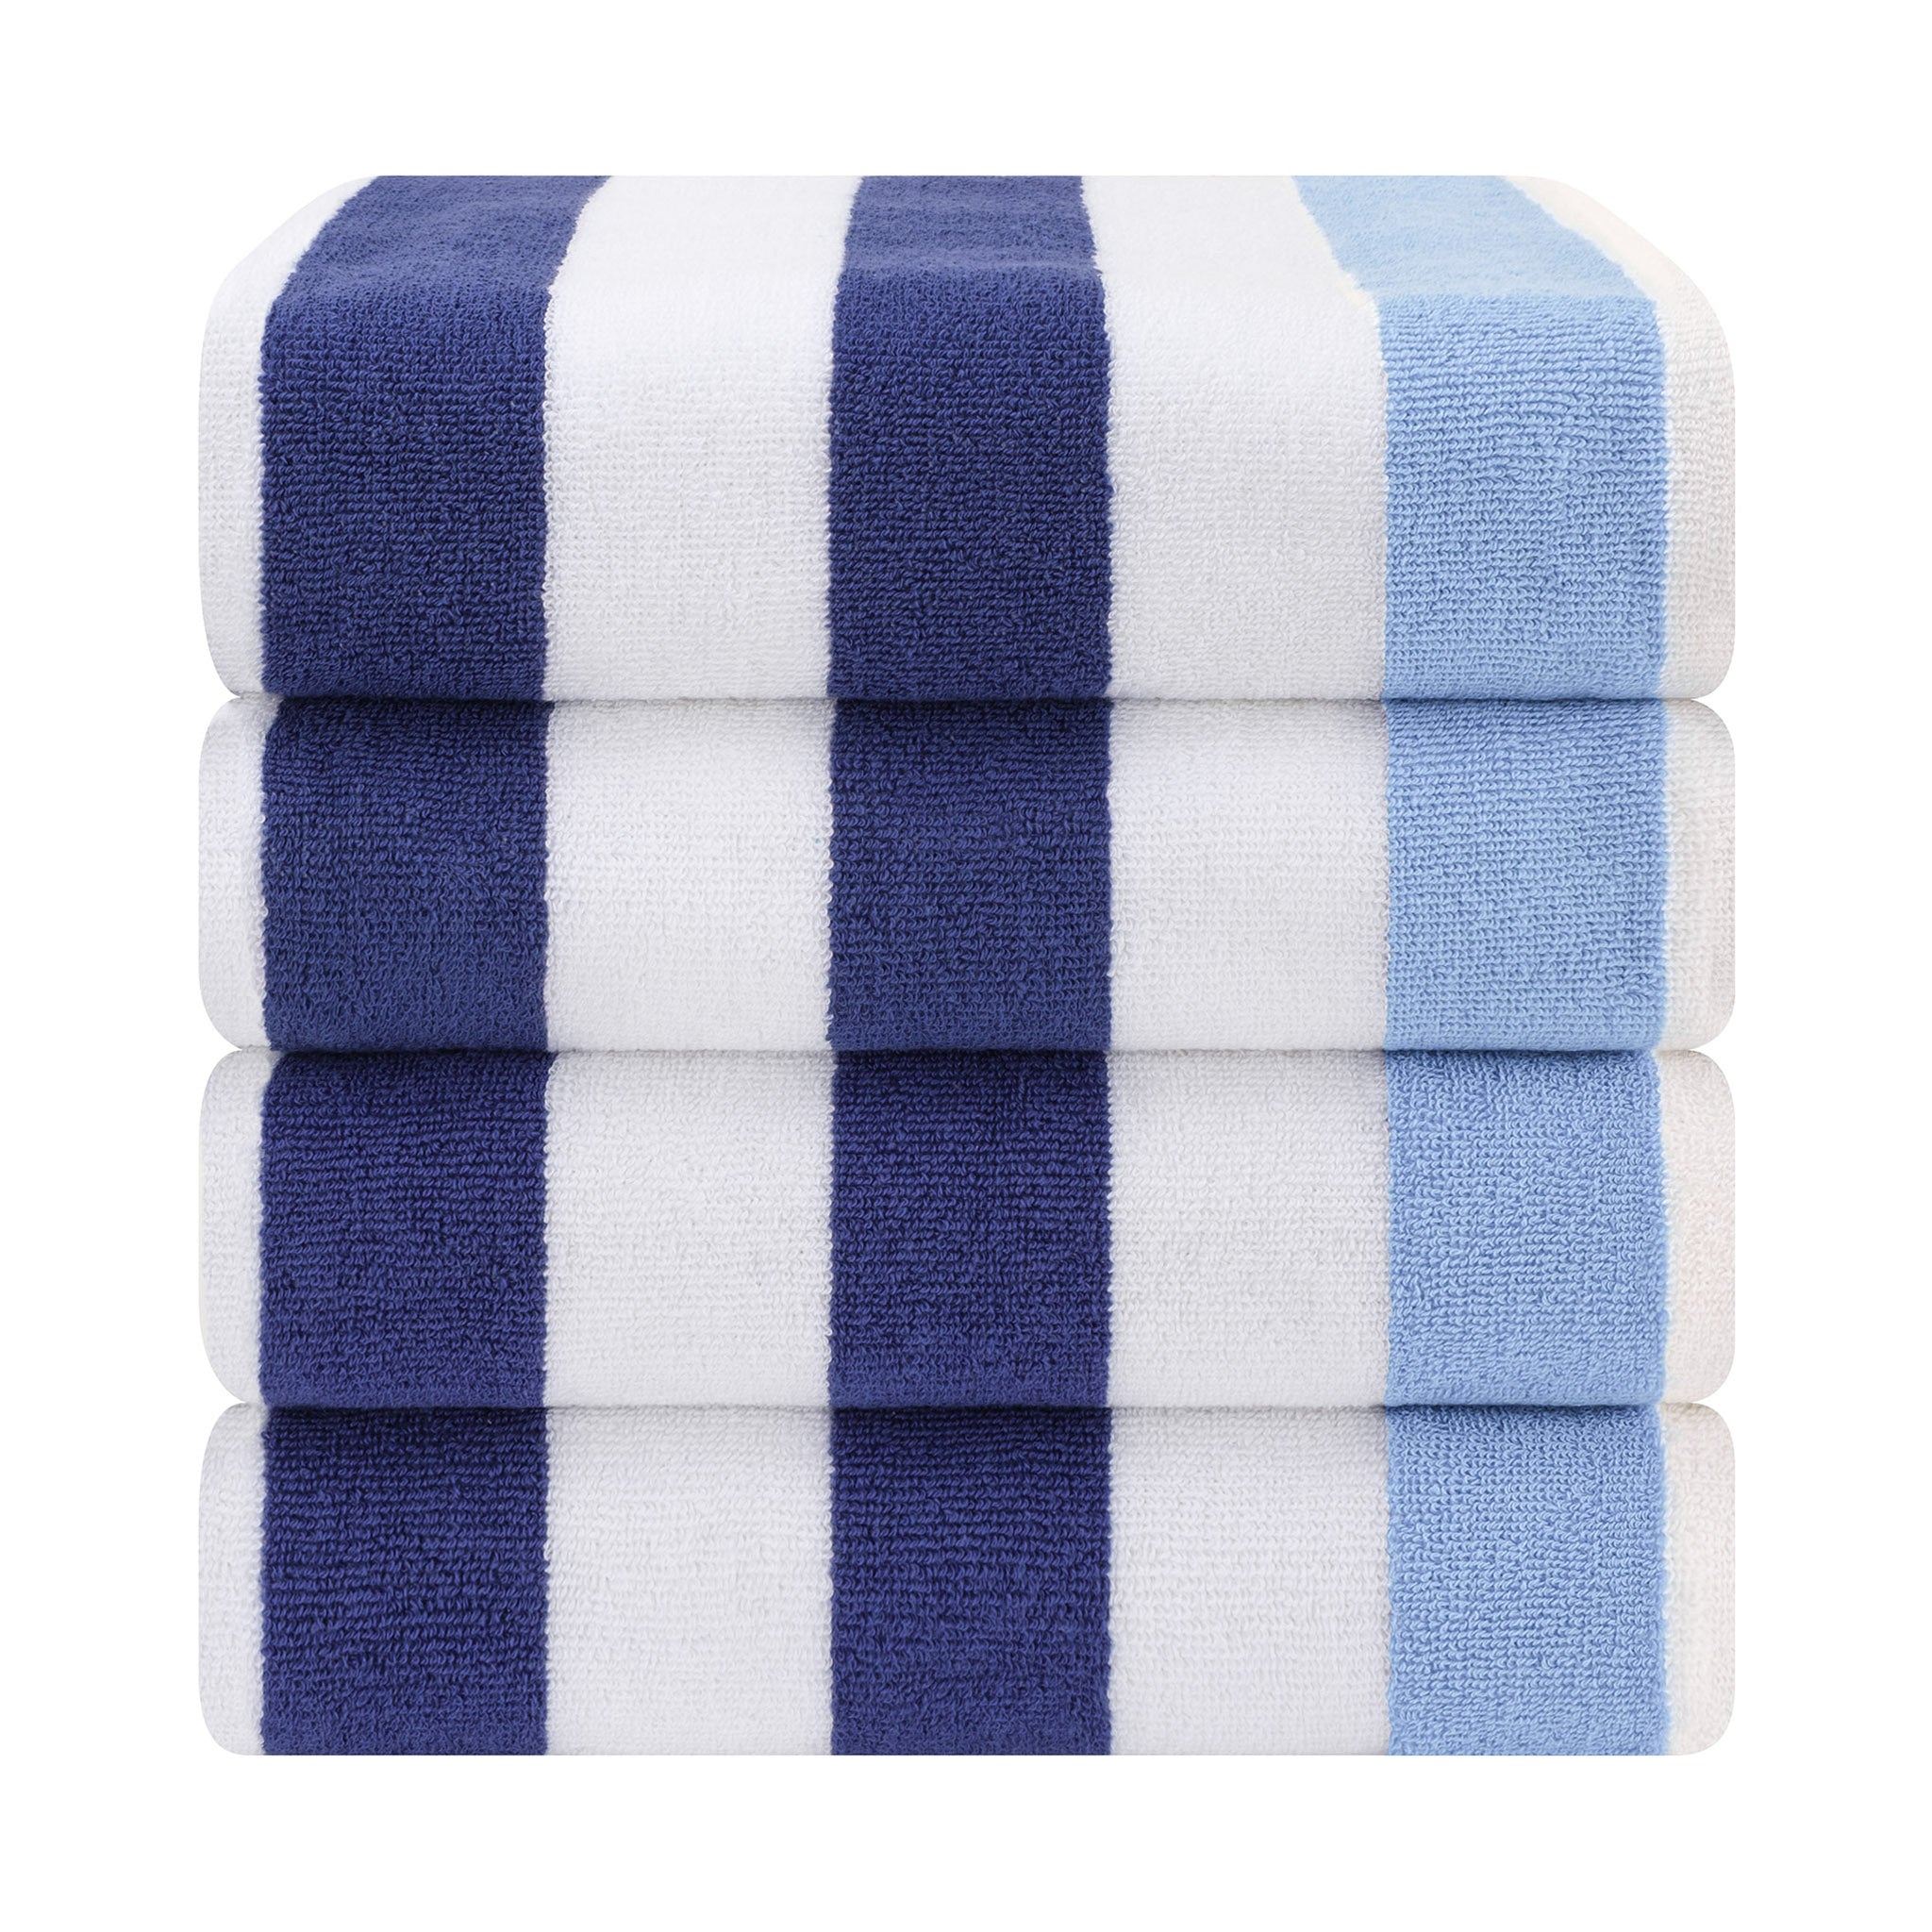 Chakir Turkish Linens Premium Quality 100% Cotton Turkish Cabana Thick  Stripe Pool Beach Towels 4-Pack (Light Blue, 30x60 Inch) 4 Pack Light Blue